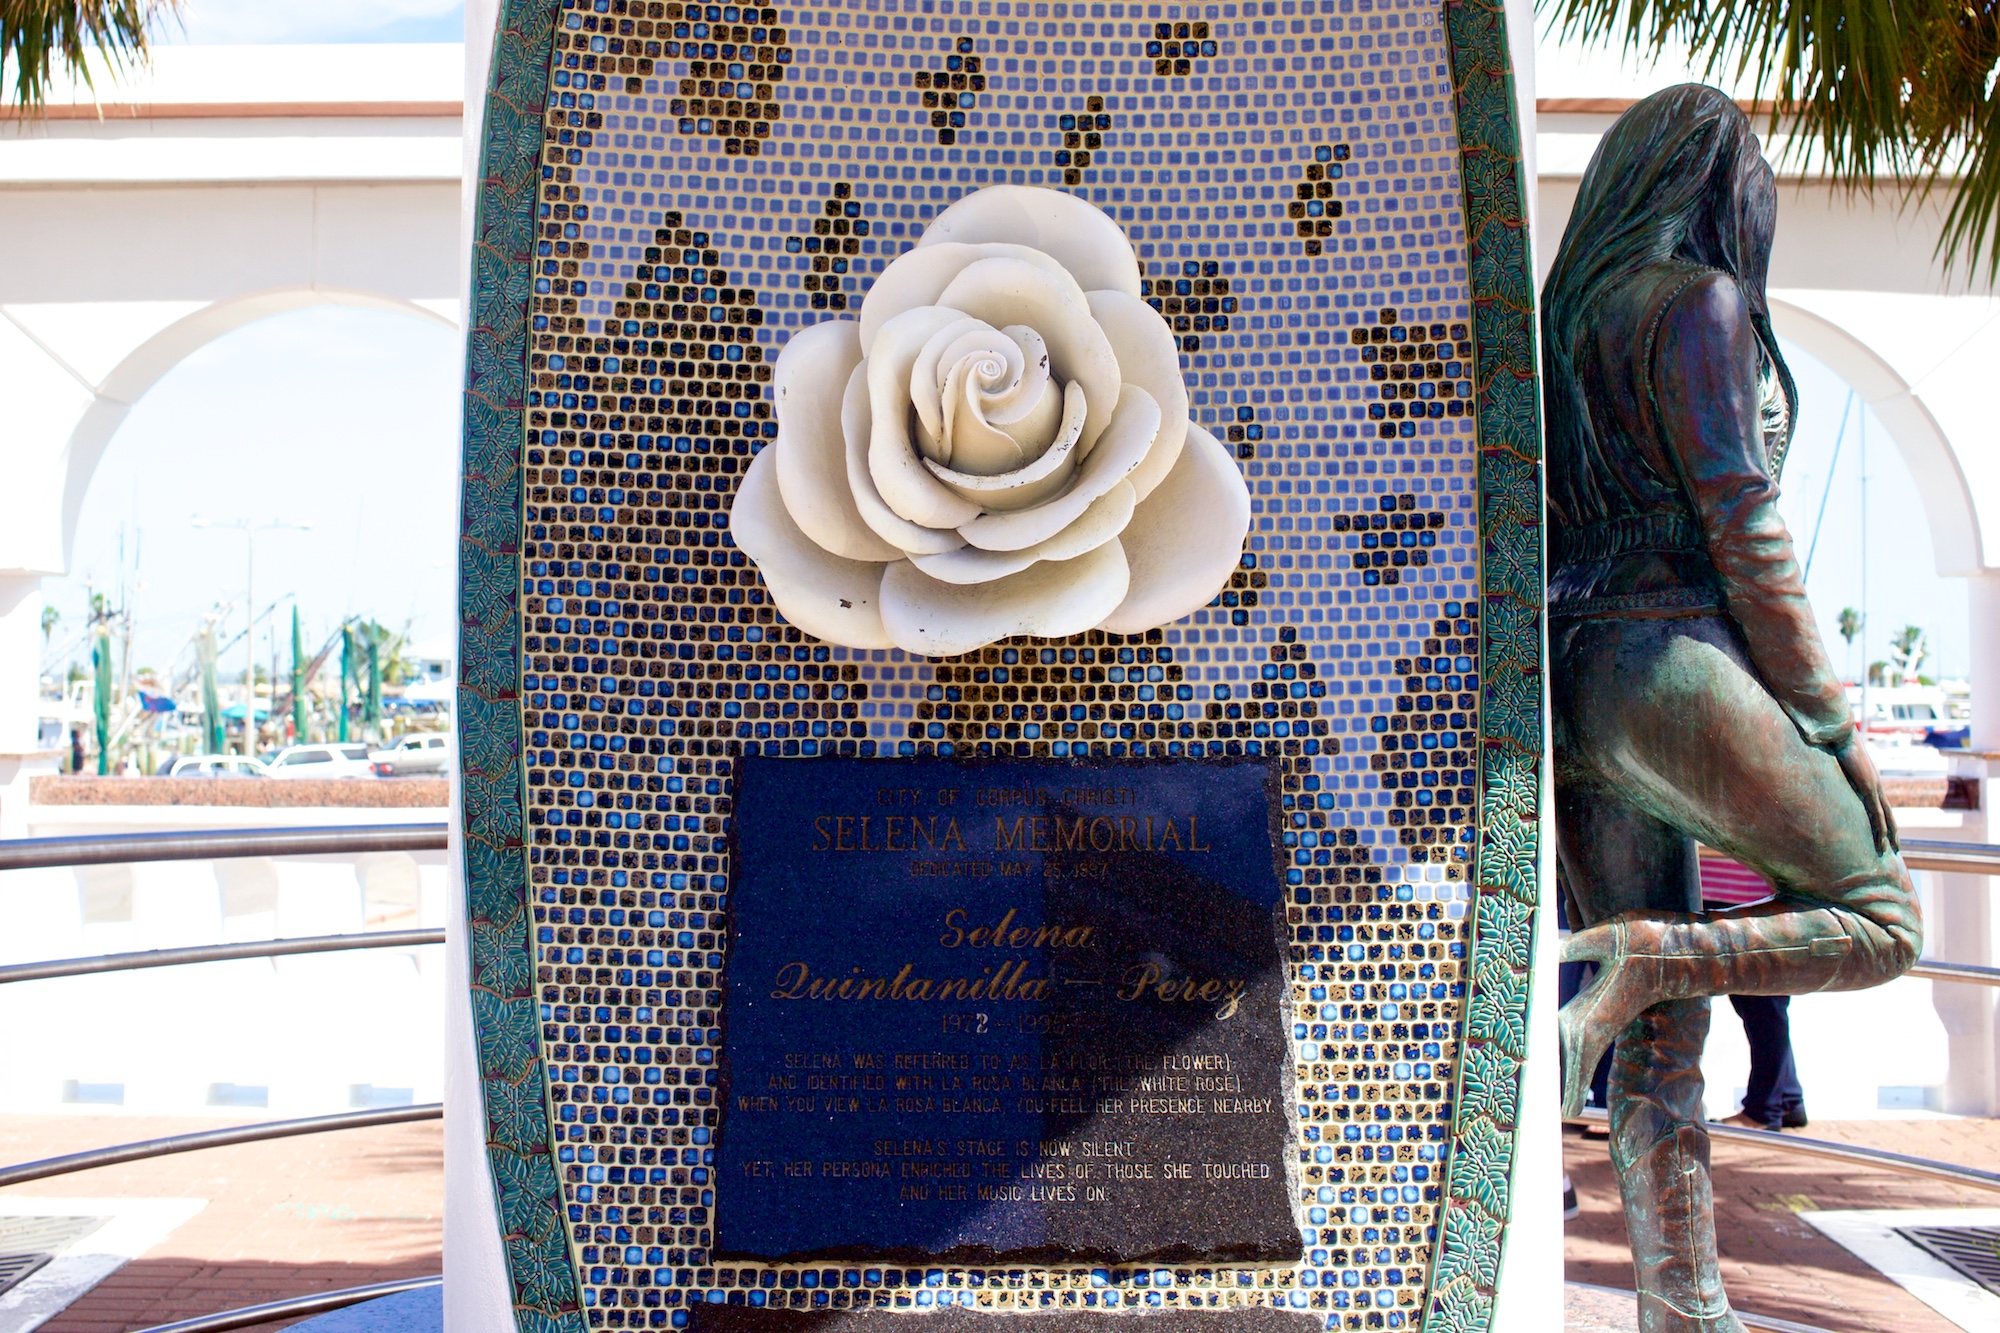 The Selena memorial in Corpus Christi.